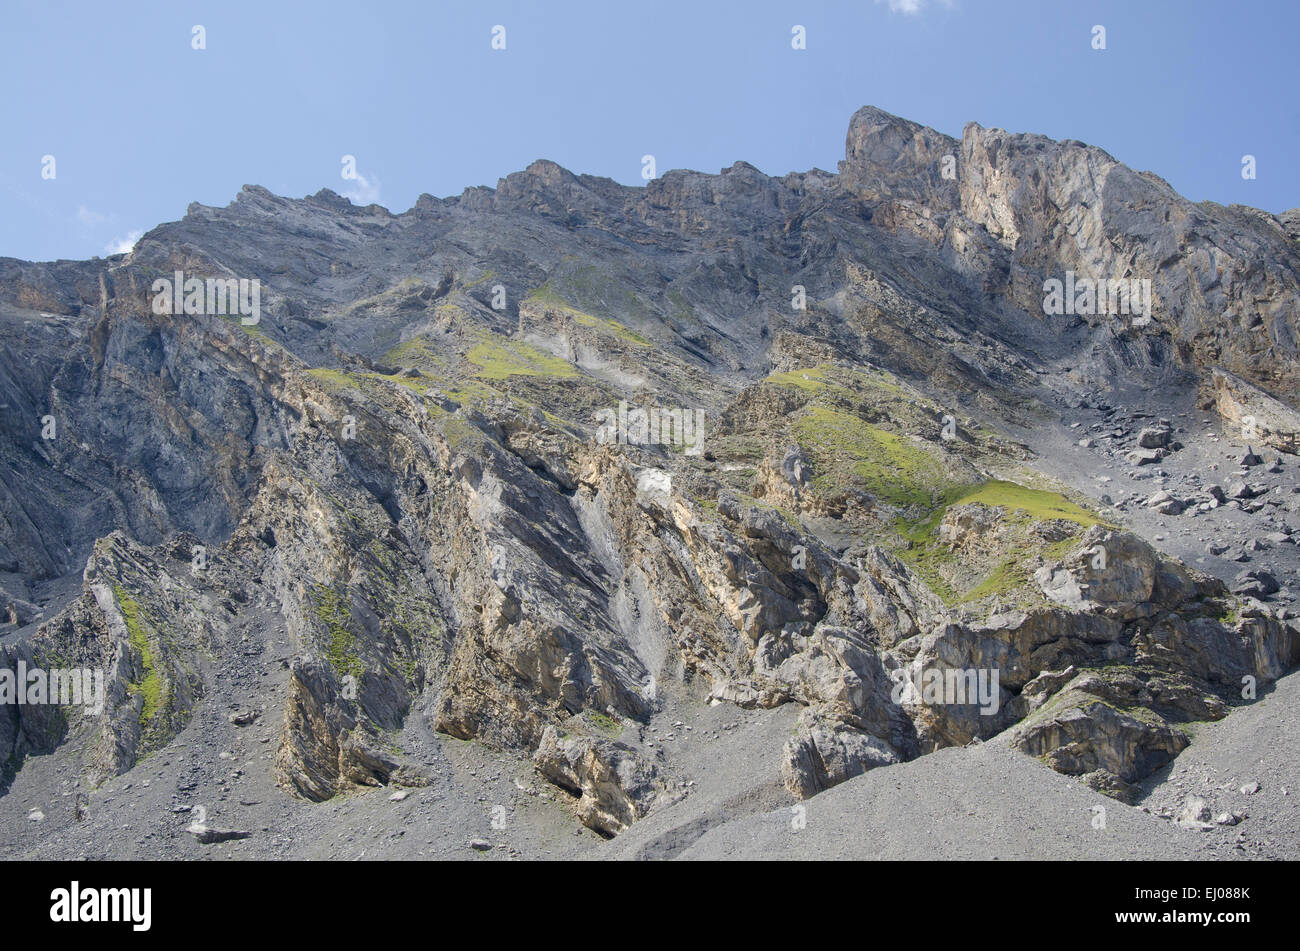 Switzerland, Europe, Graubünden, Grisons, national park, Engadine, lower engadine, Zernez, Val Sassa, stone, rock, cliff, burr, m Stock Photo